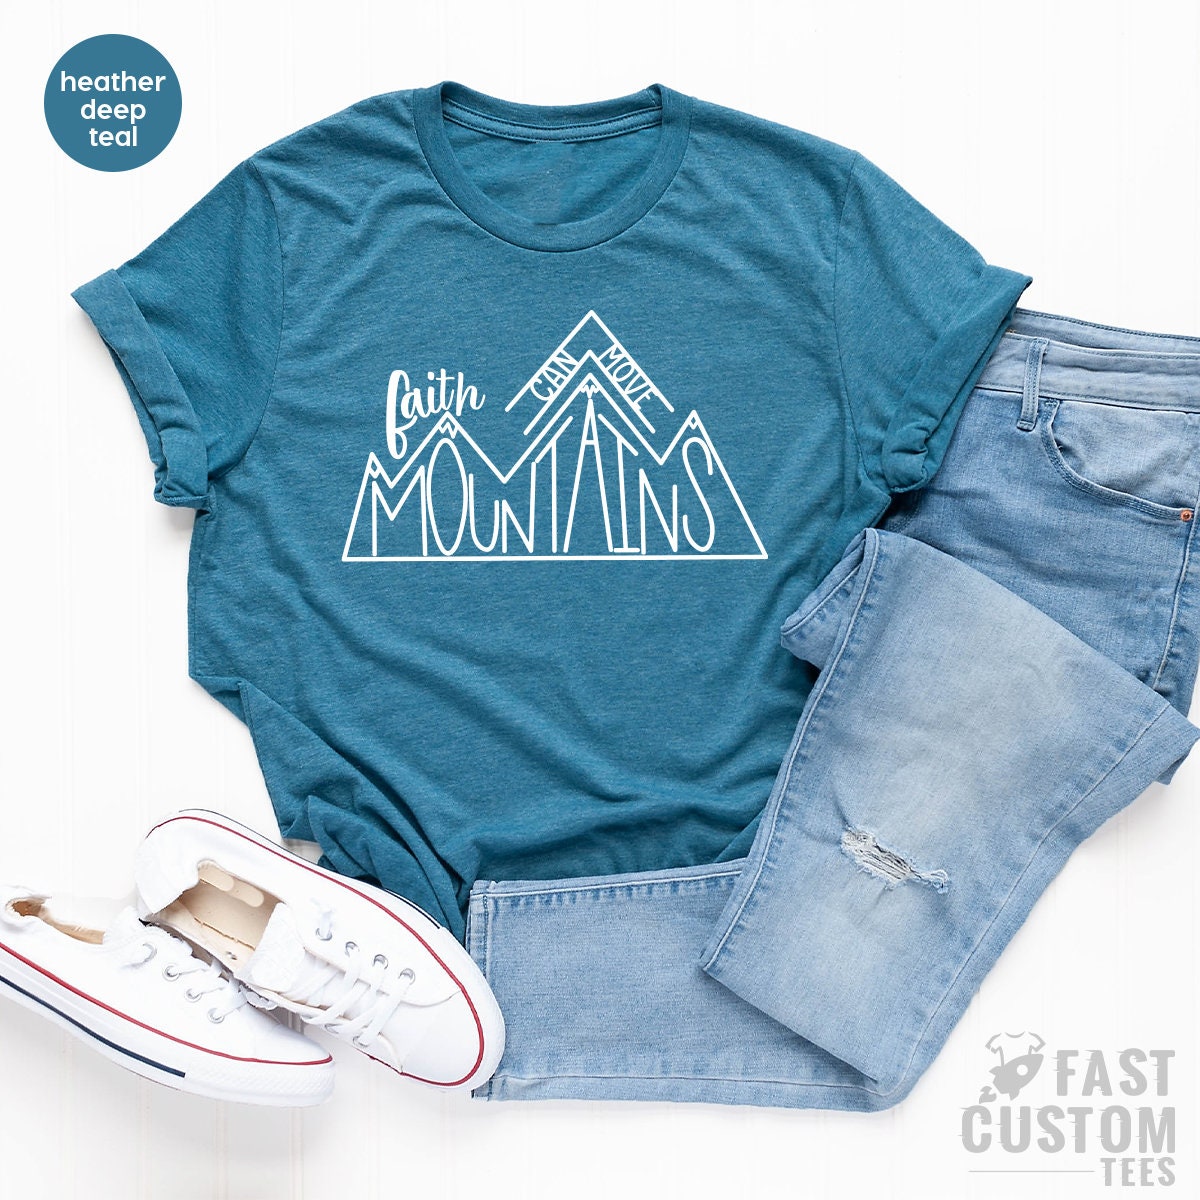 Christian T Shirt, Baptism Gifts, Faith T Shirt, Religious Shirt, Gift For Christian, Christian Mom Shirt, Faith Can Move Mountain - Fastdeliverytees.com